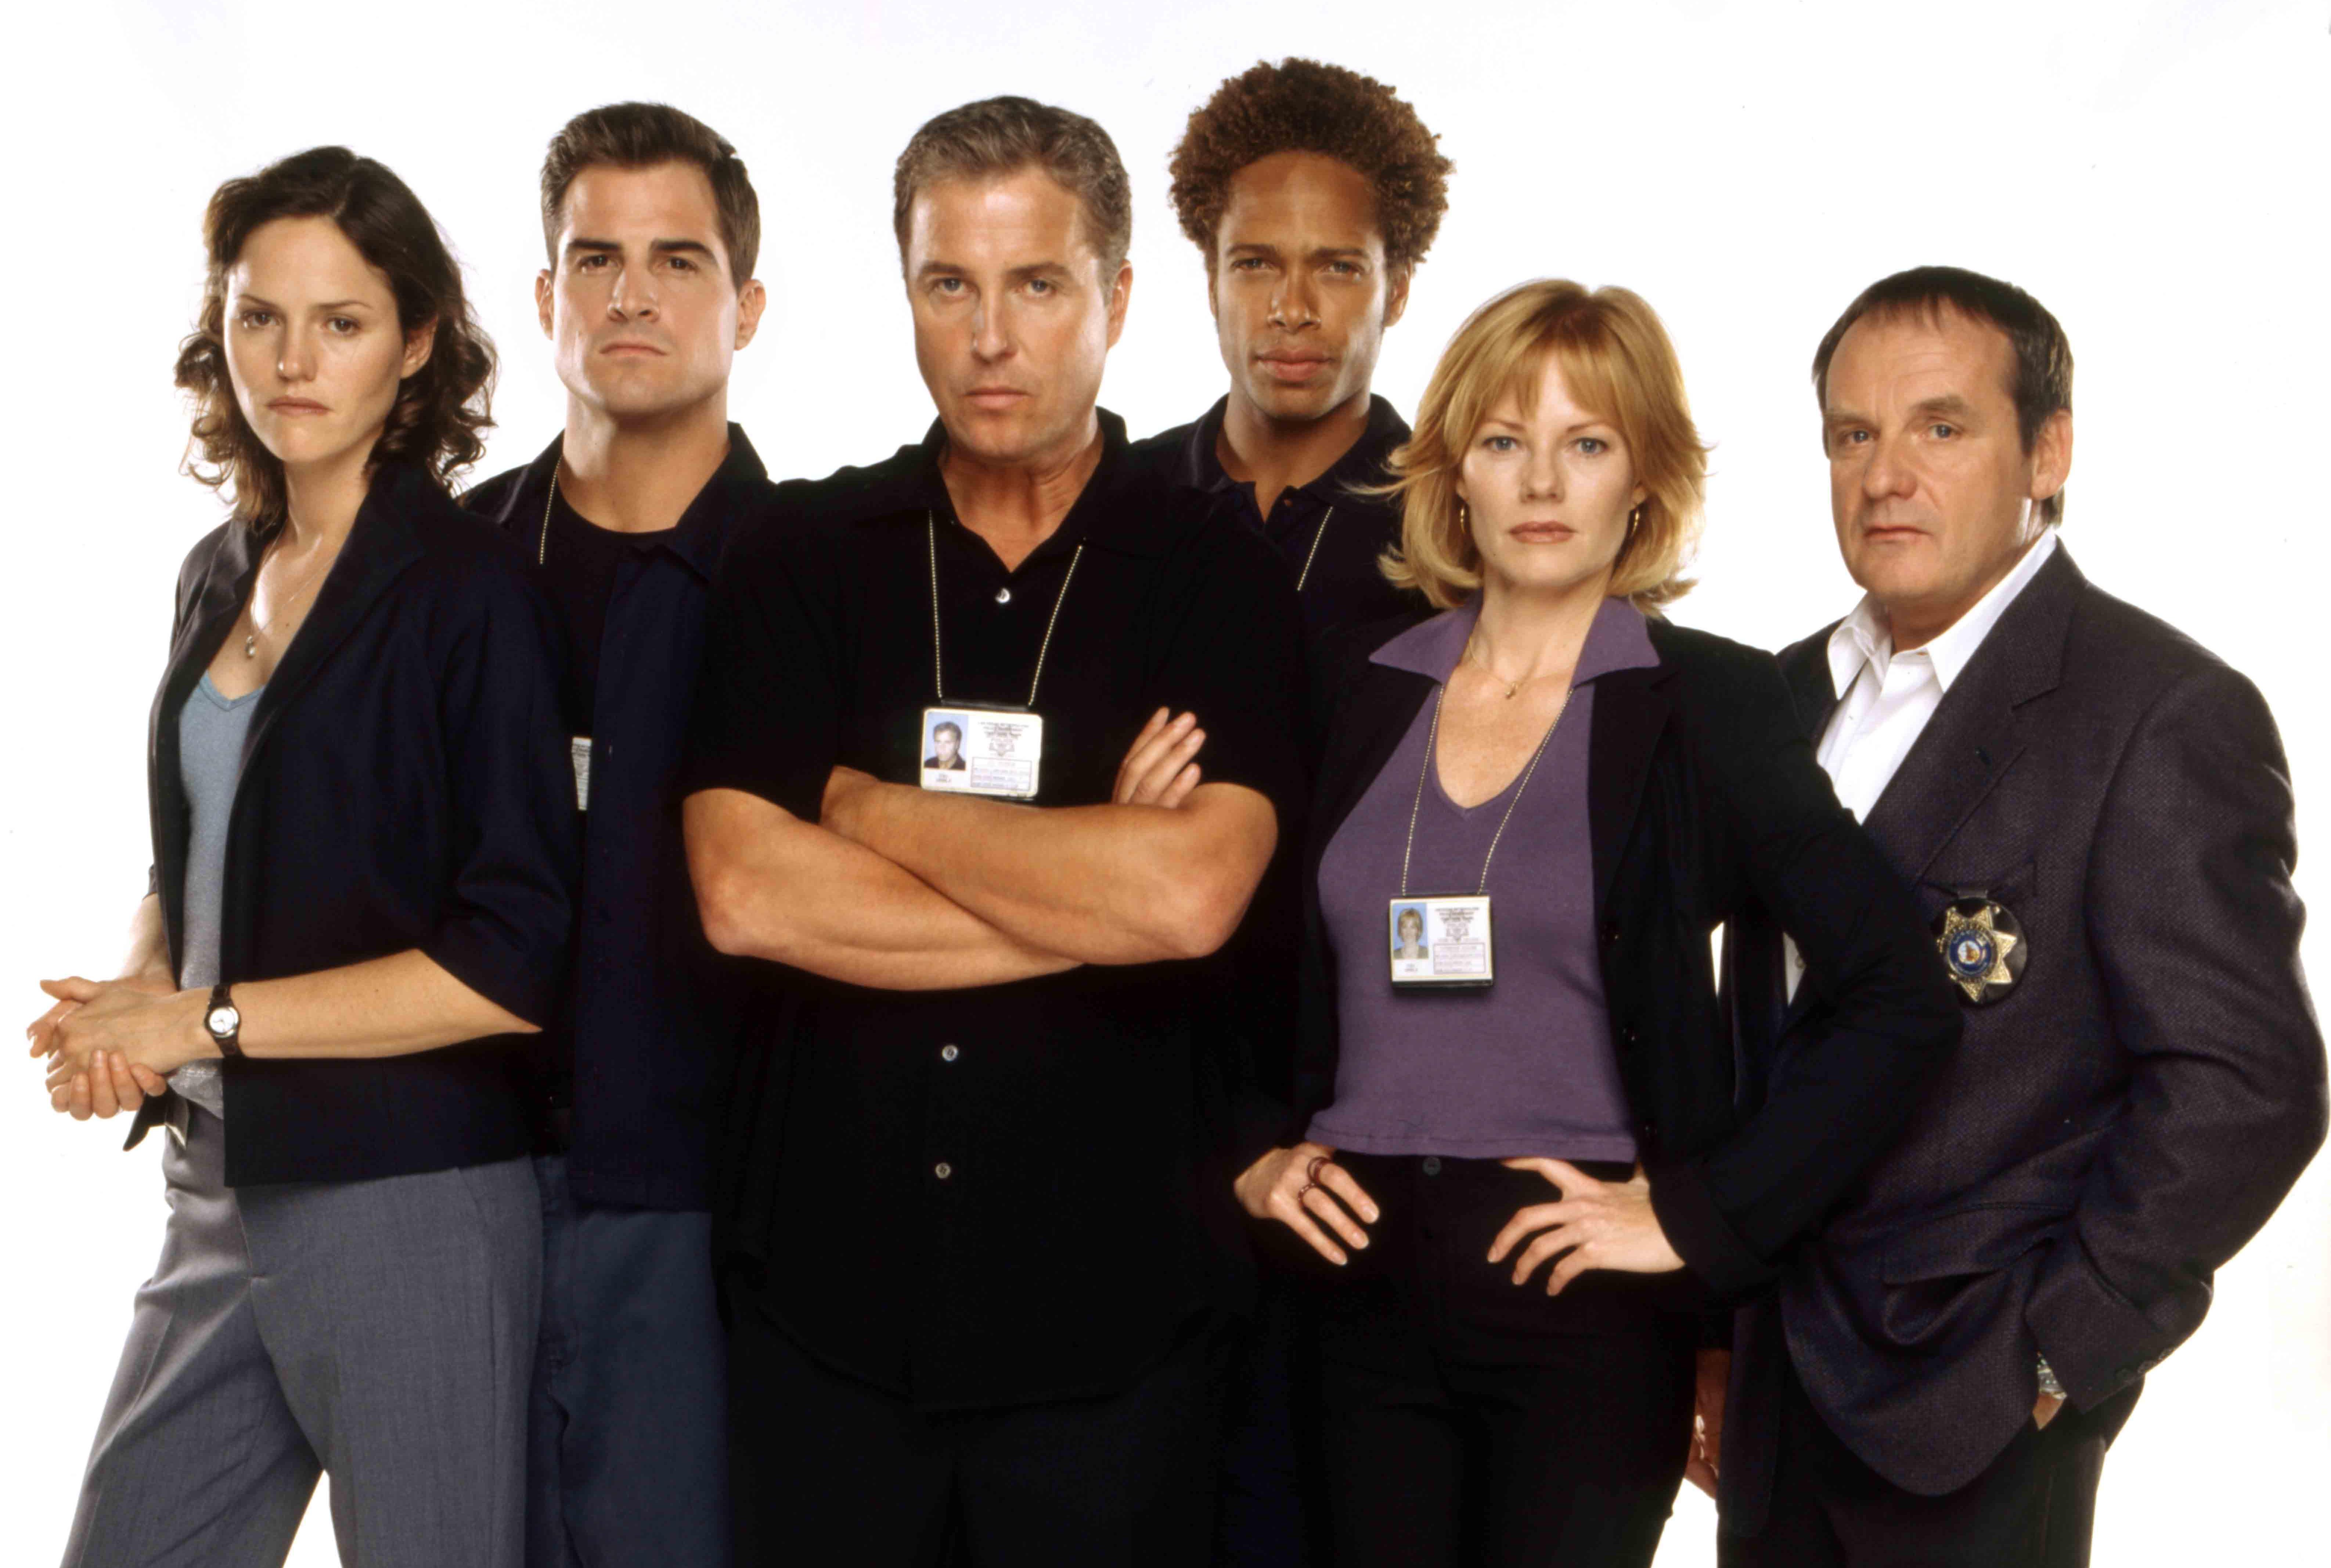 A cast photo of the stars of CSI